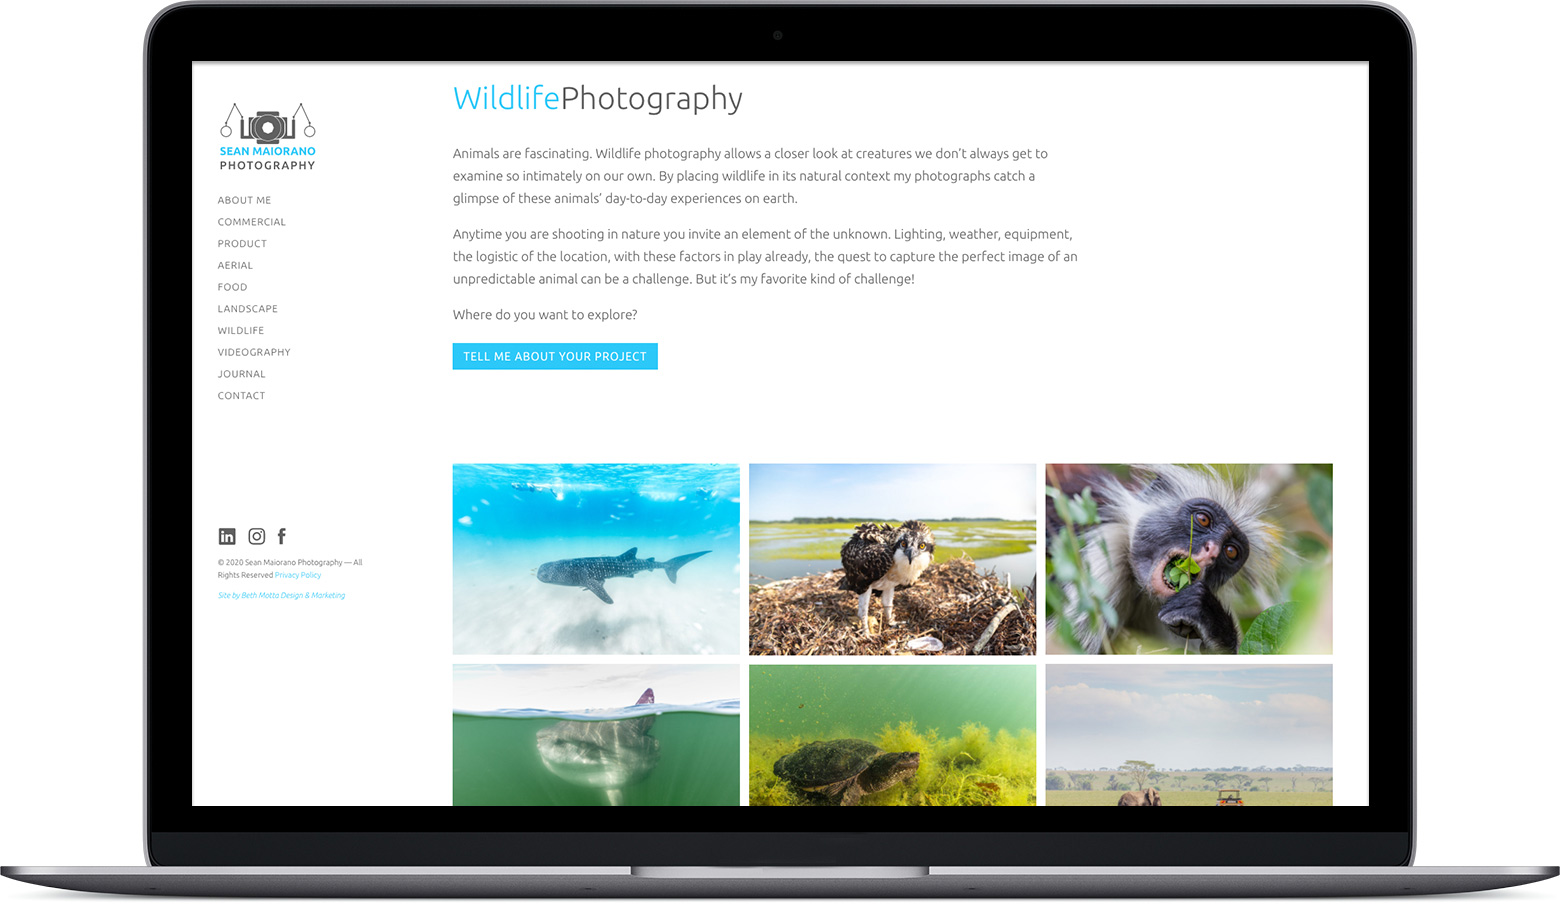 photography portfolio website design